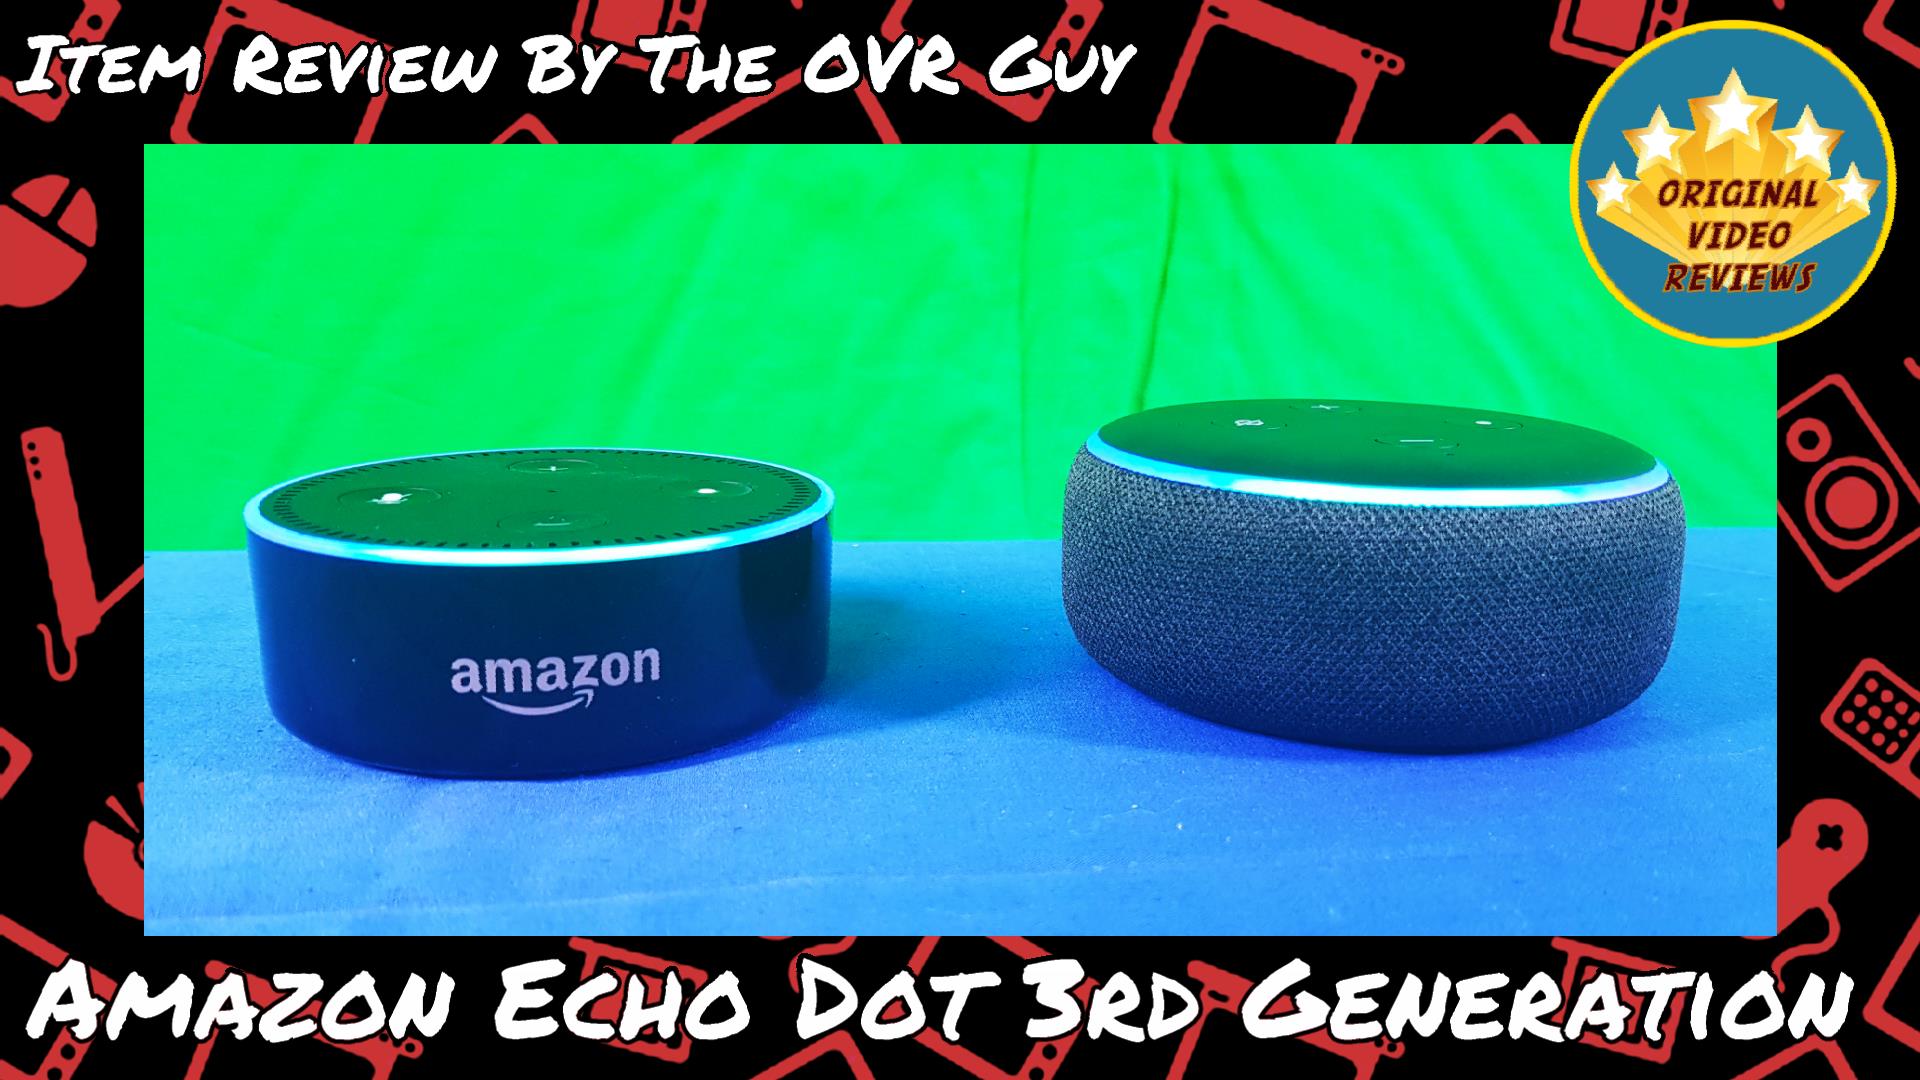 Amazon Echo Dot 3rd Generation Review (Thumbnail)